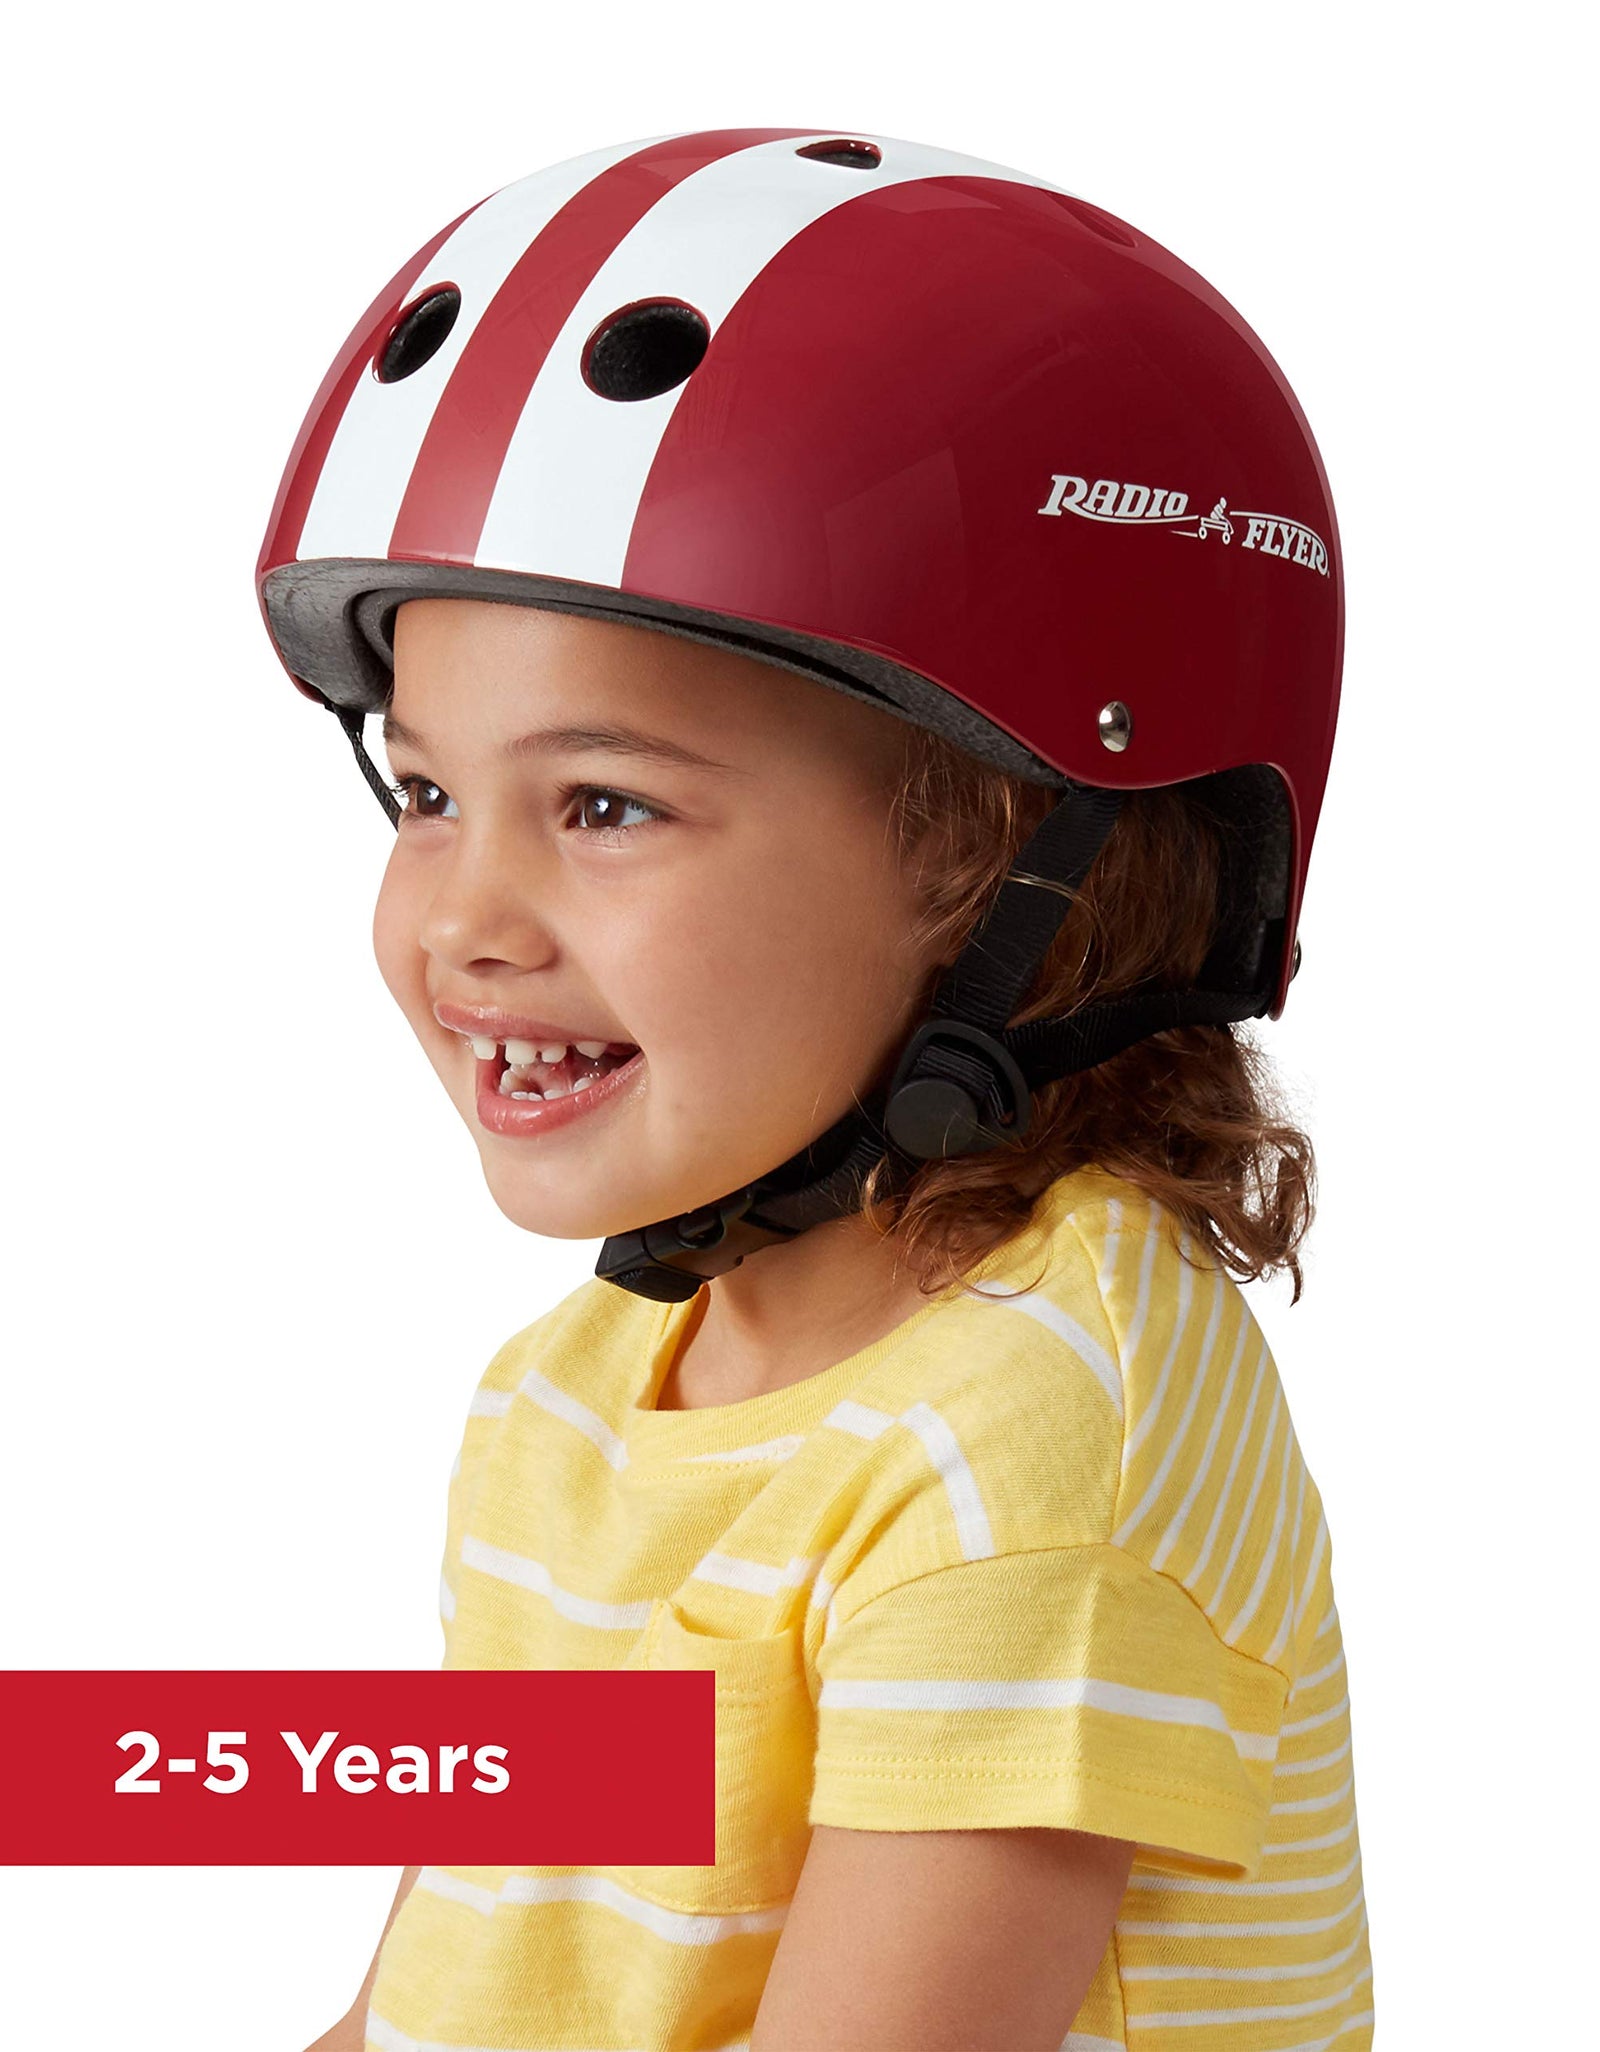 Radio Flyer Helmet, Toddler or Kids Helmet for Ages 2-5